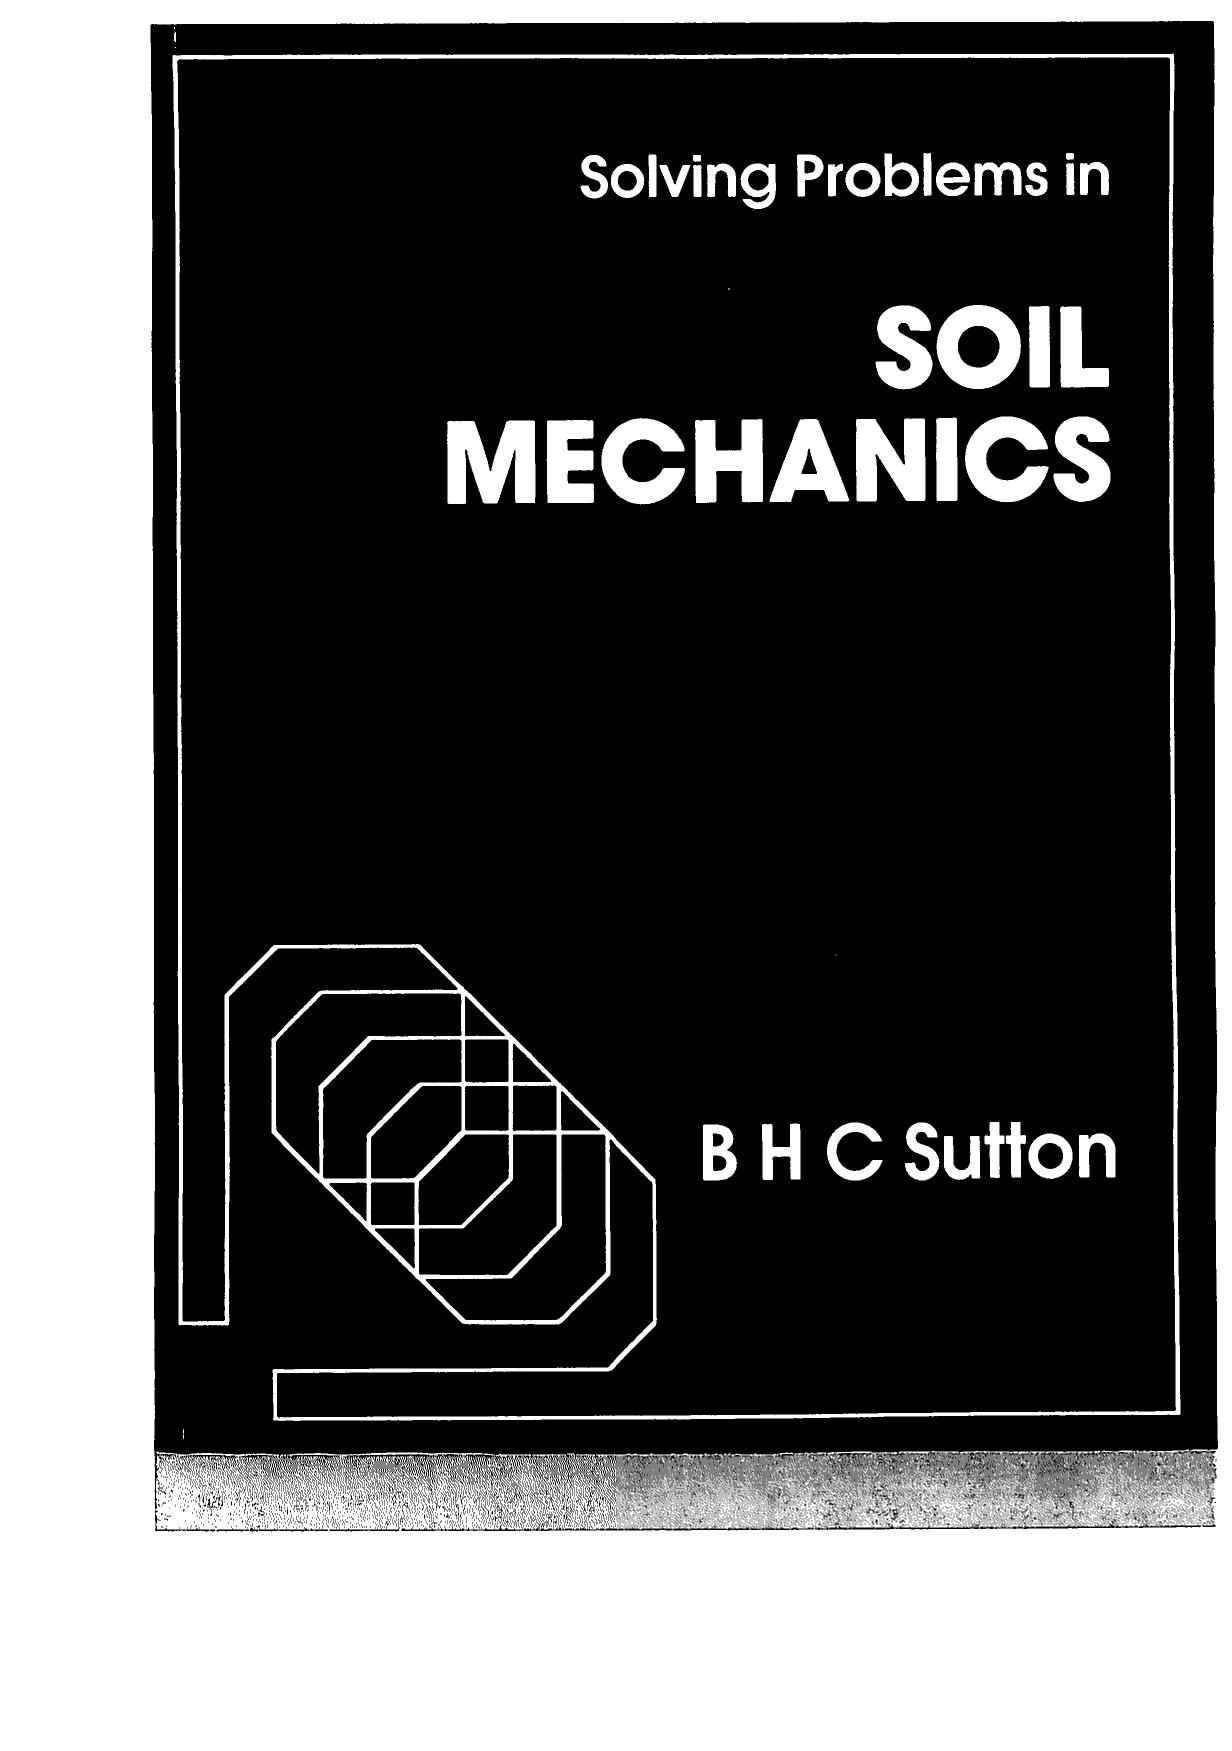 Solving Problems in SOIL MECHANICS by B H C Sutton